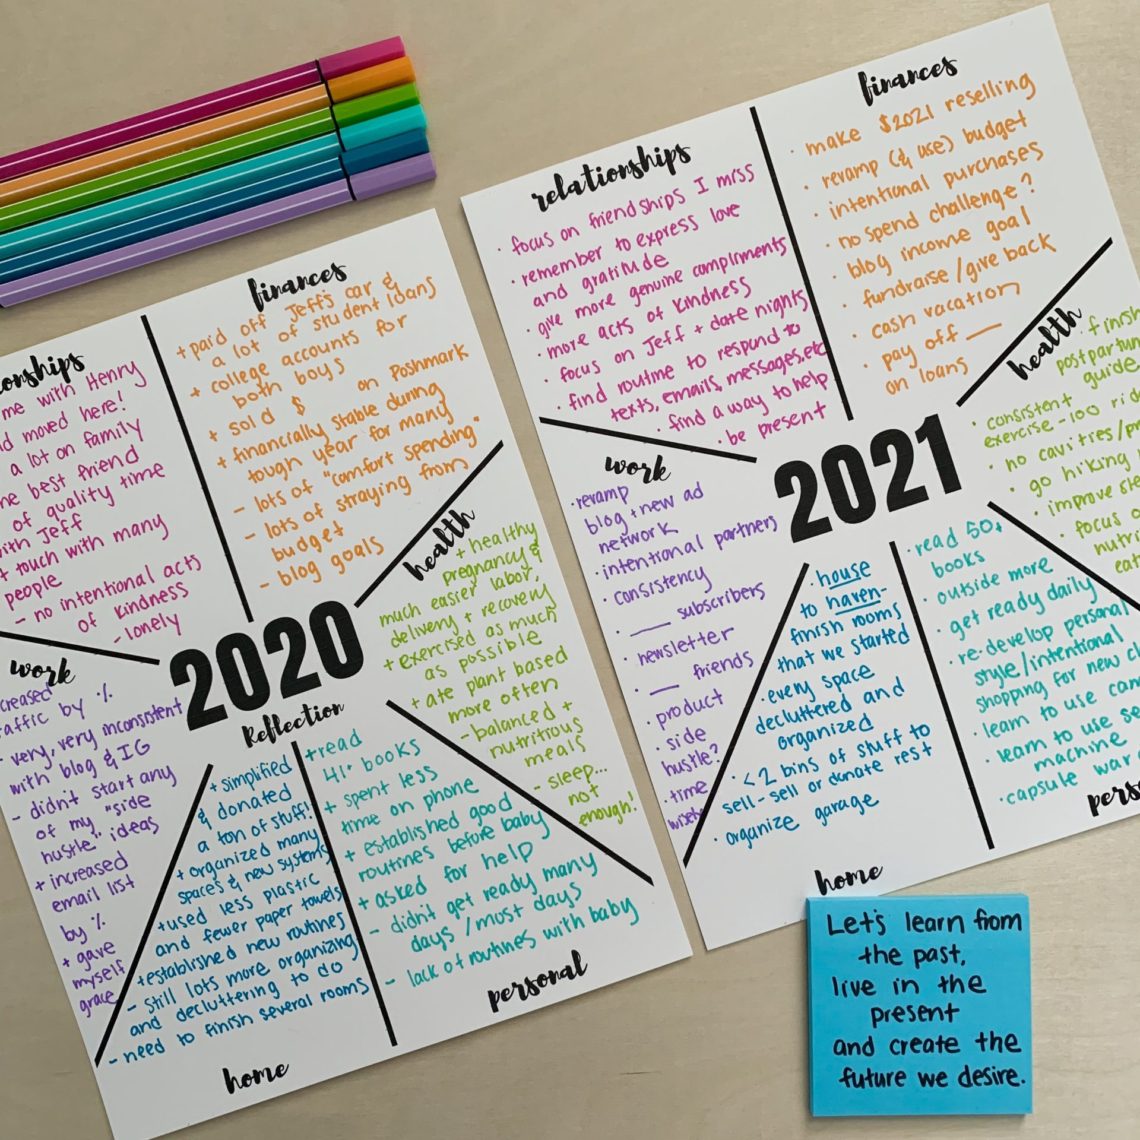 2021 Goal Setting Printable and 2020 reflection printable. #newyearsresolutions #goalsetting #2021 #newyearsgoals